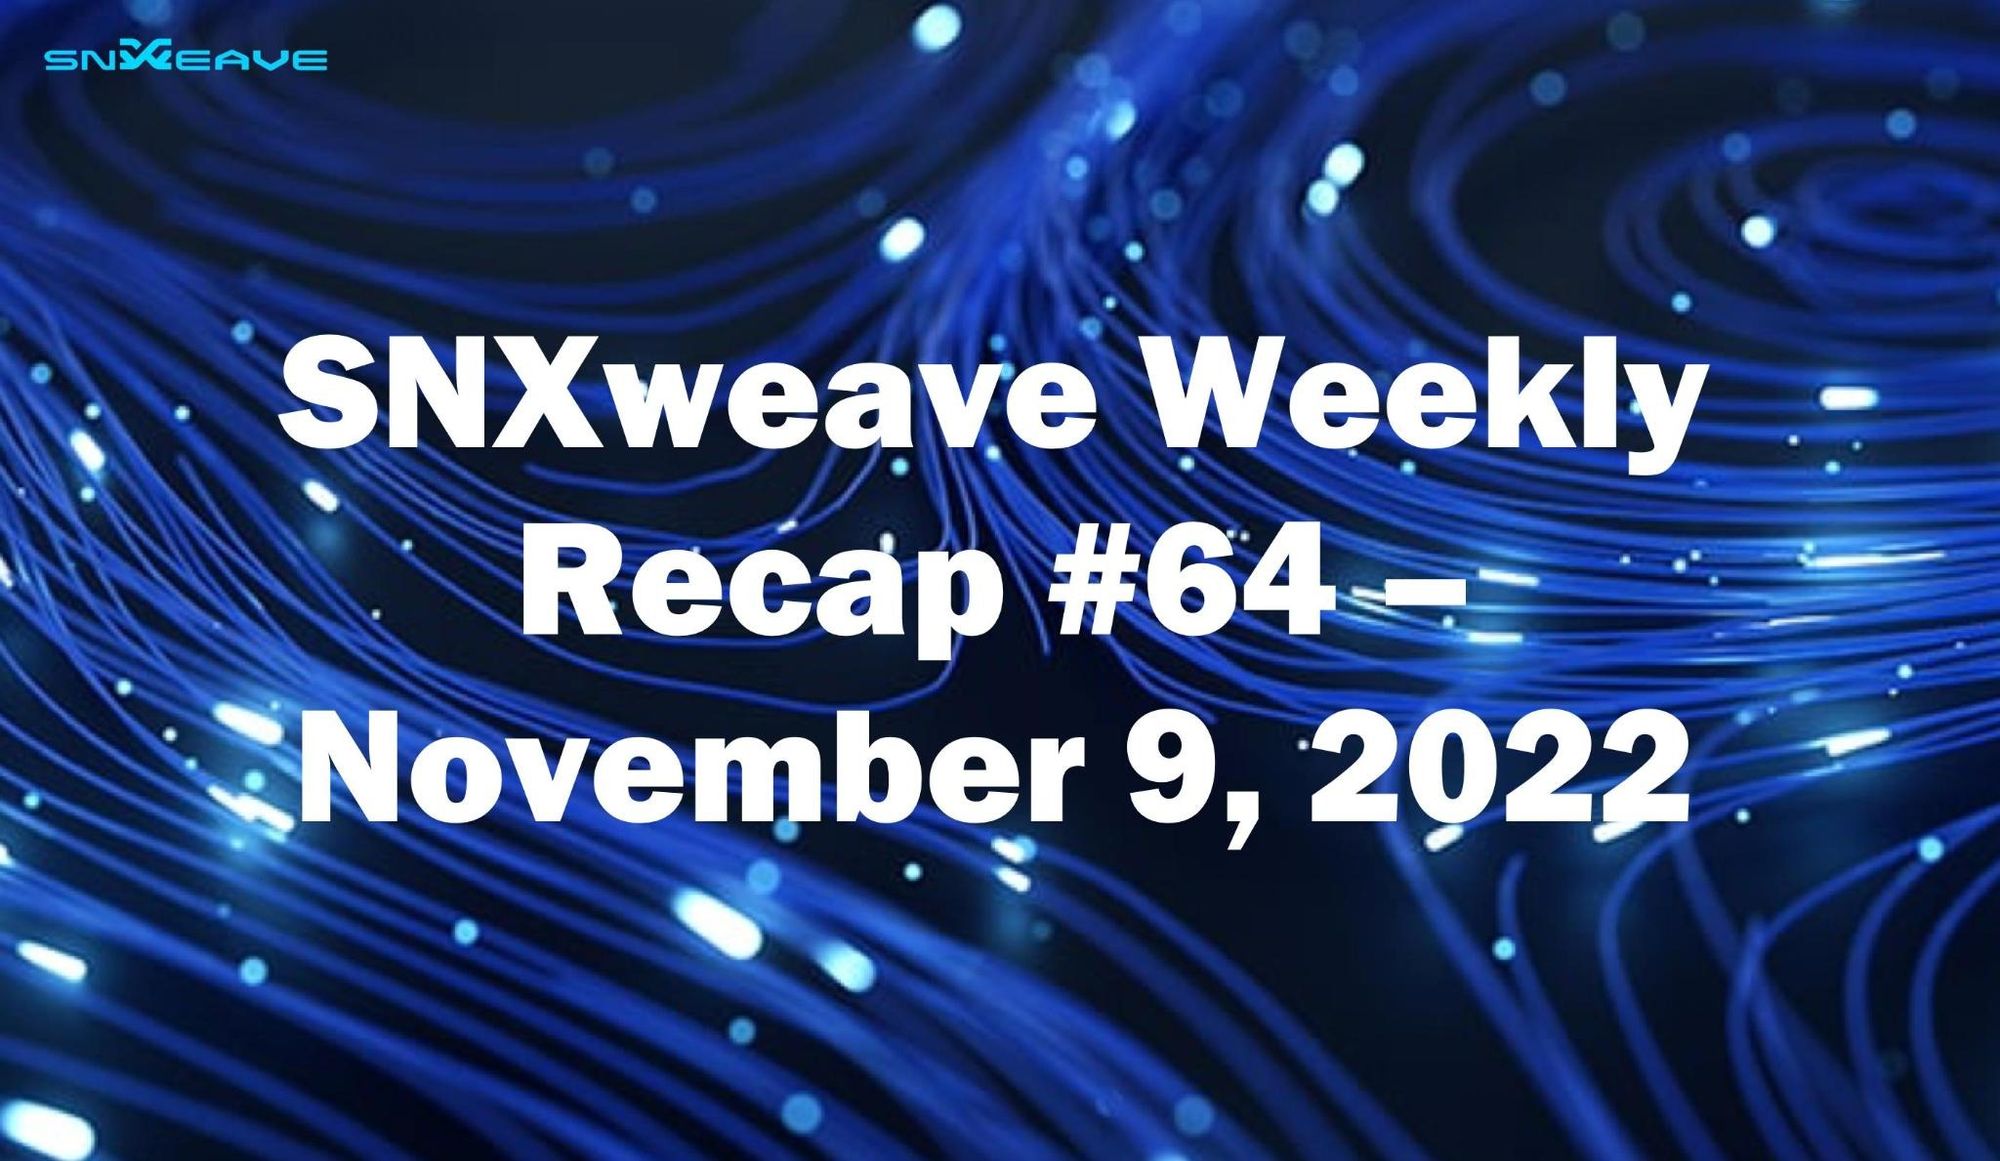 SNXweave Weekly Recap 64